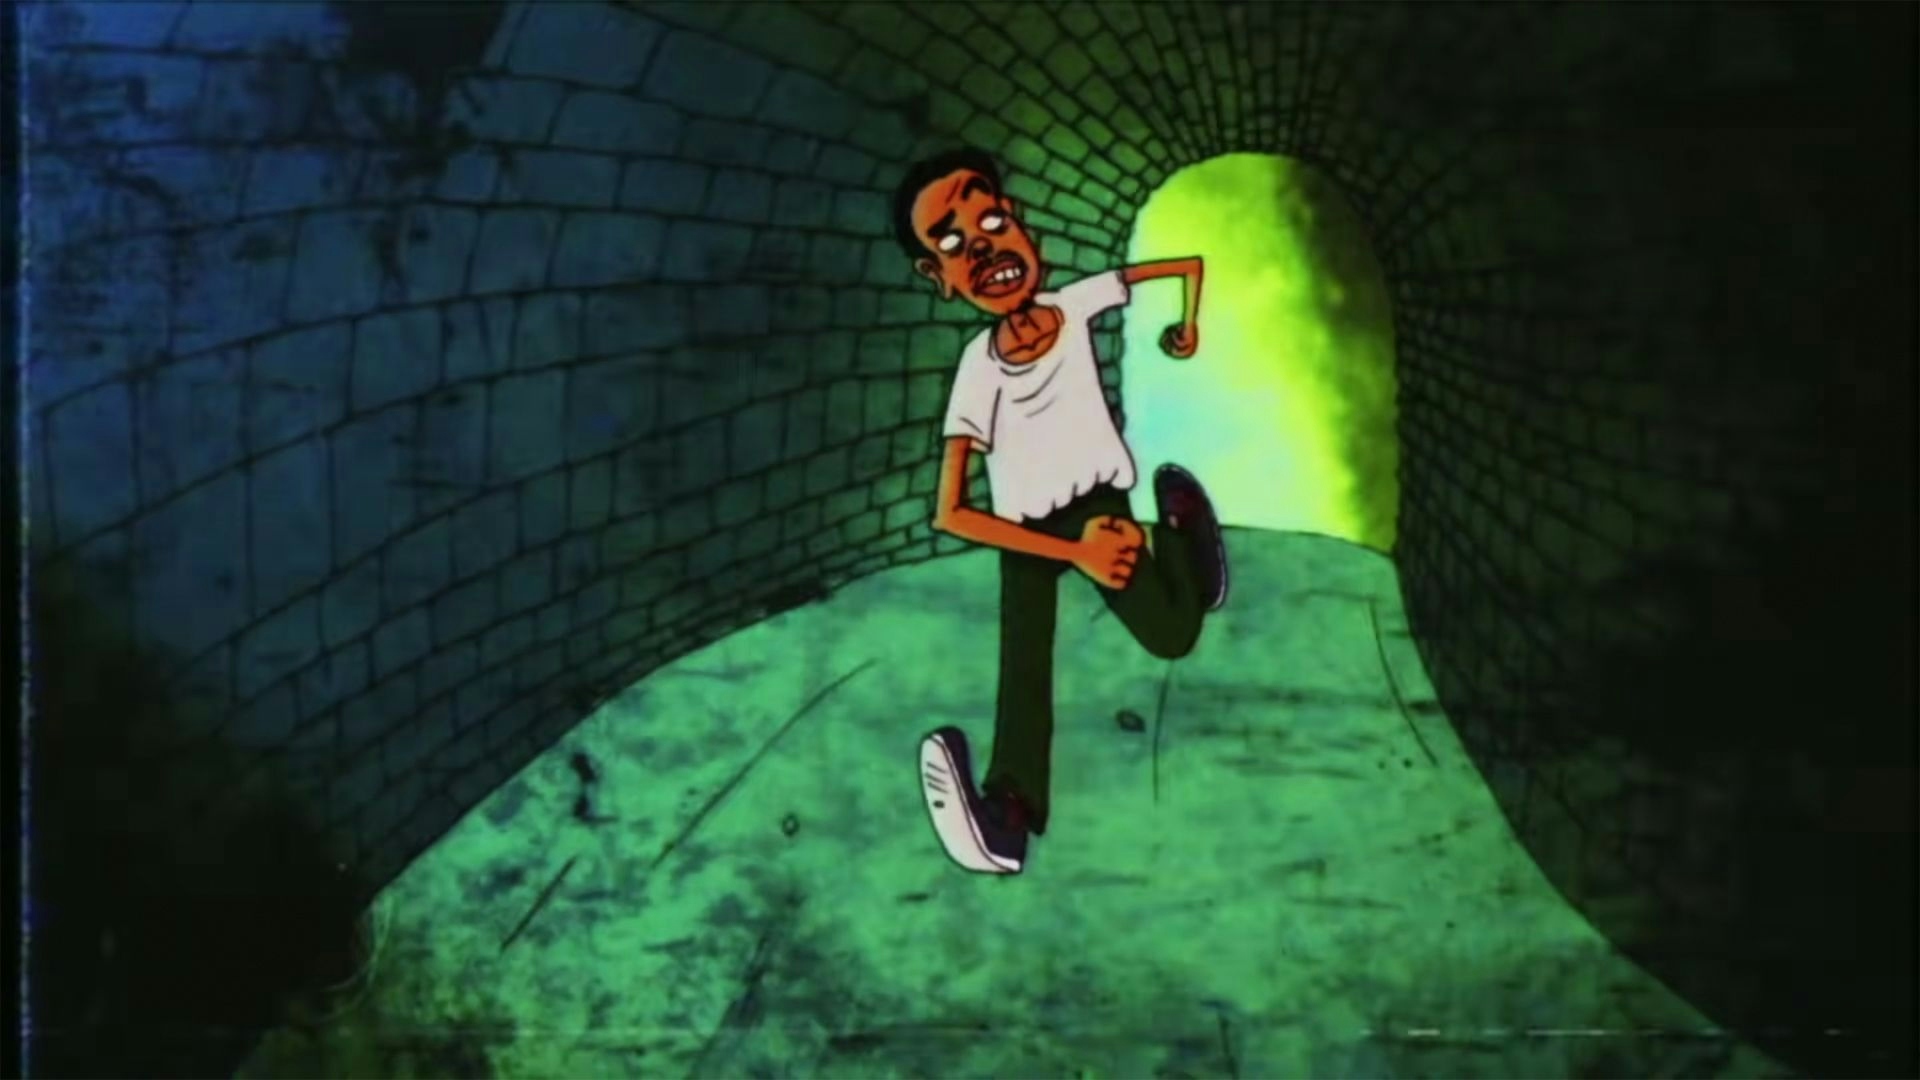 Earl Sweatshirt “Off Top” Official Music Video still, Early running through a tunnel